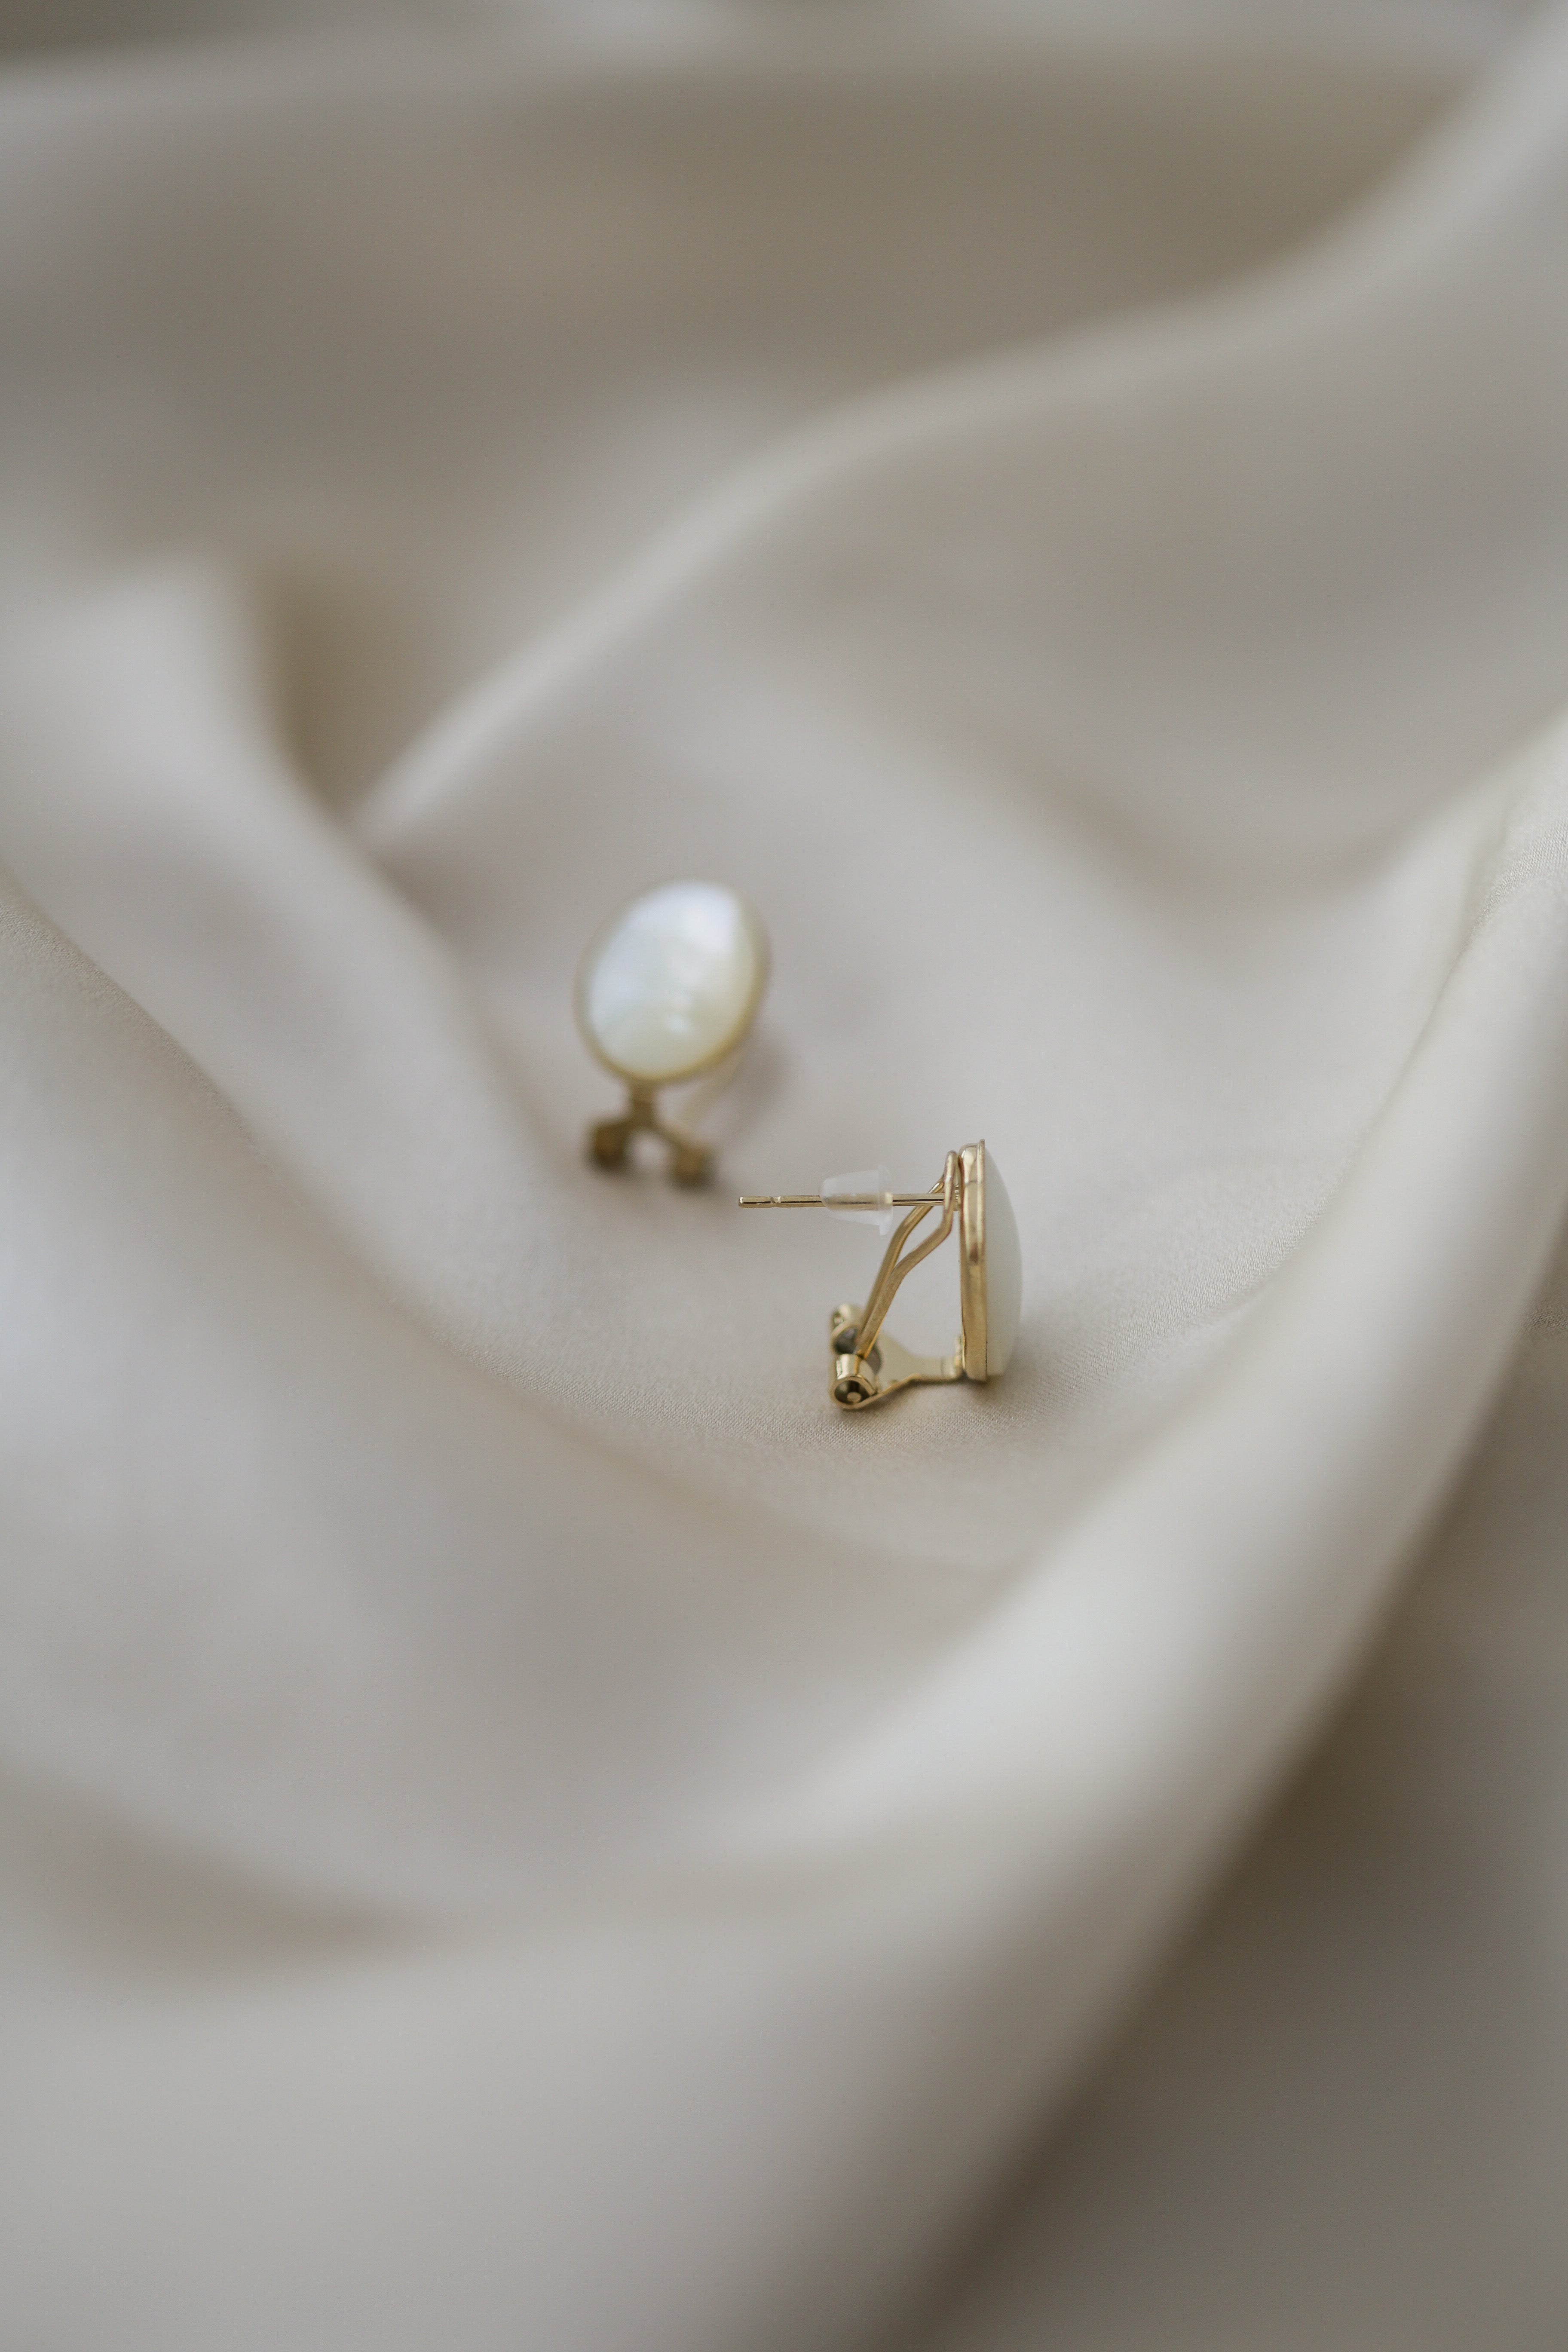 Xanthia Earrings - Boutique Minimaliste has waterproof, durable, elegant and vintage inspired jewelry